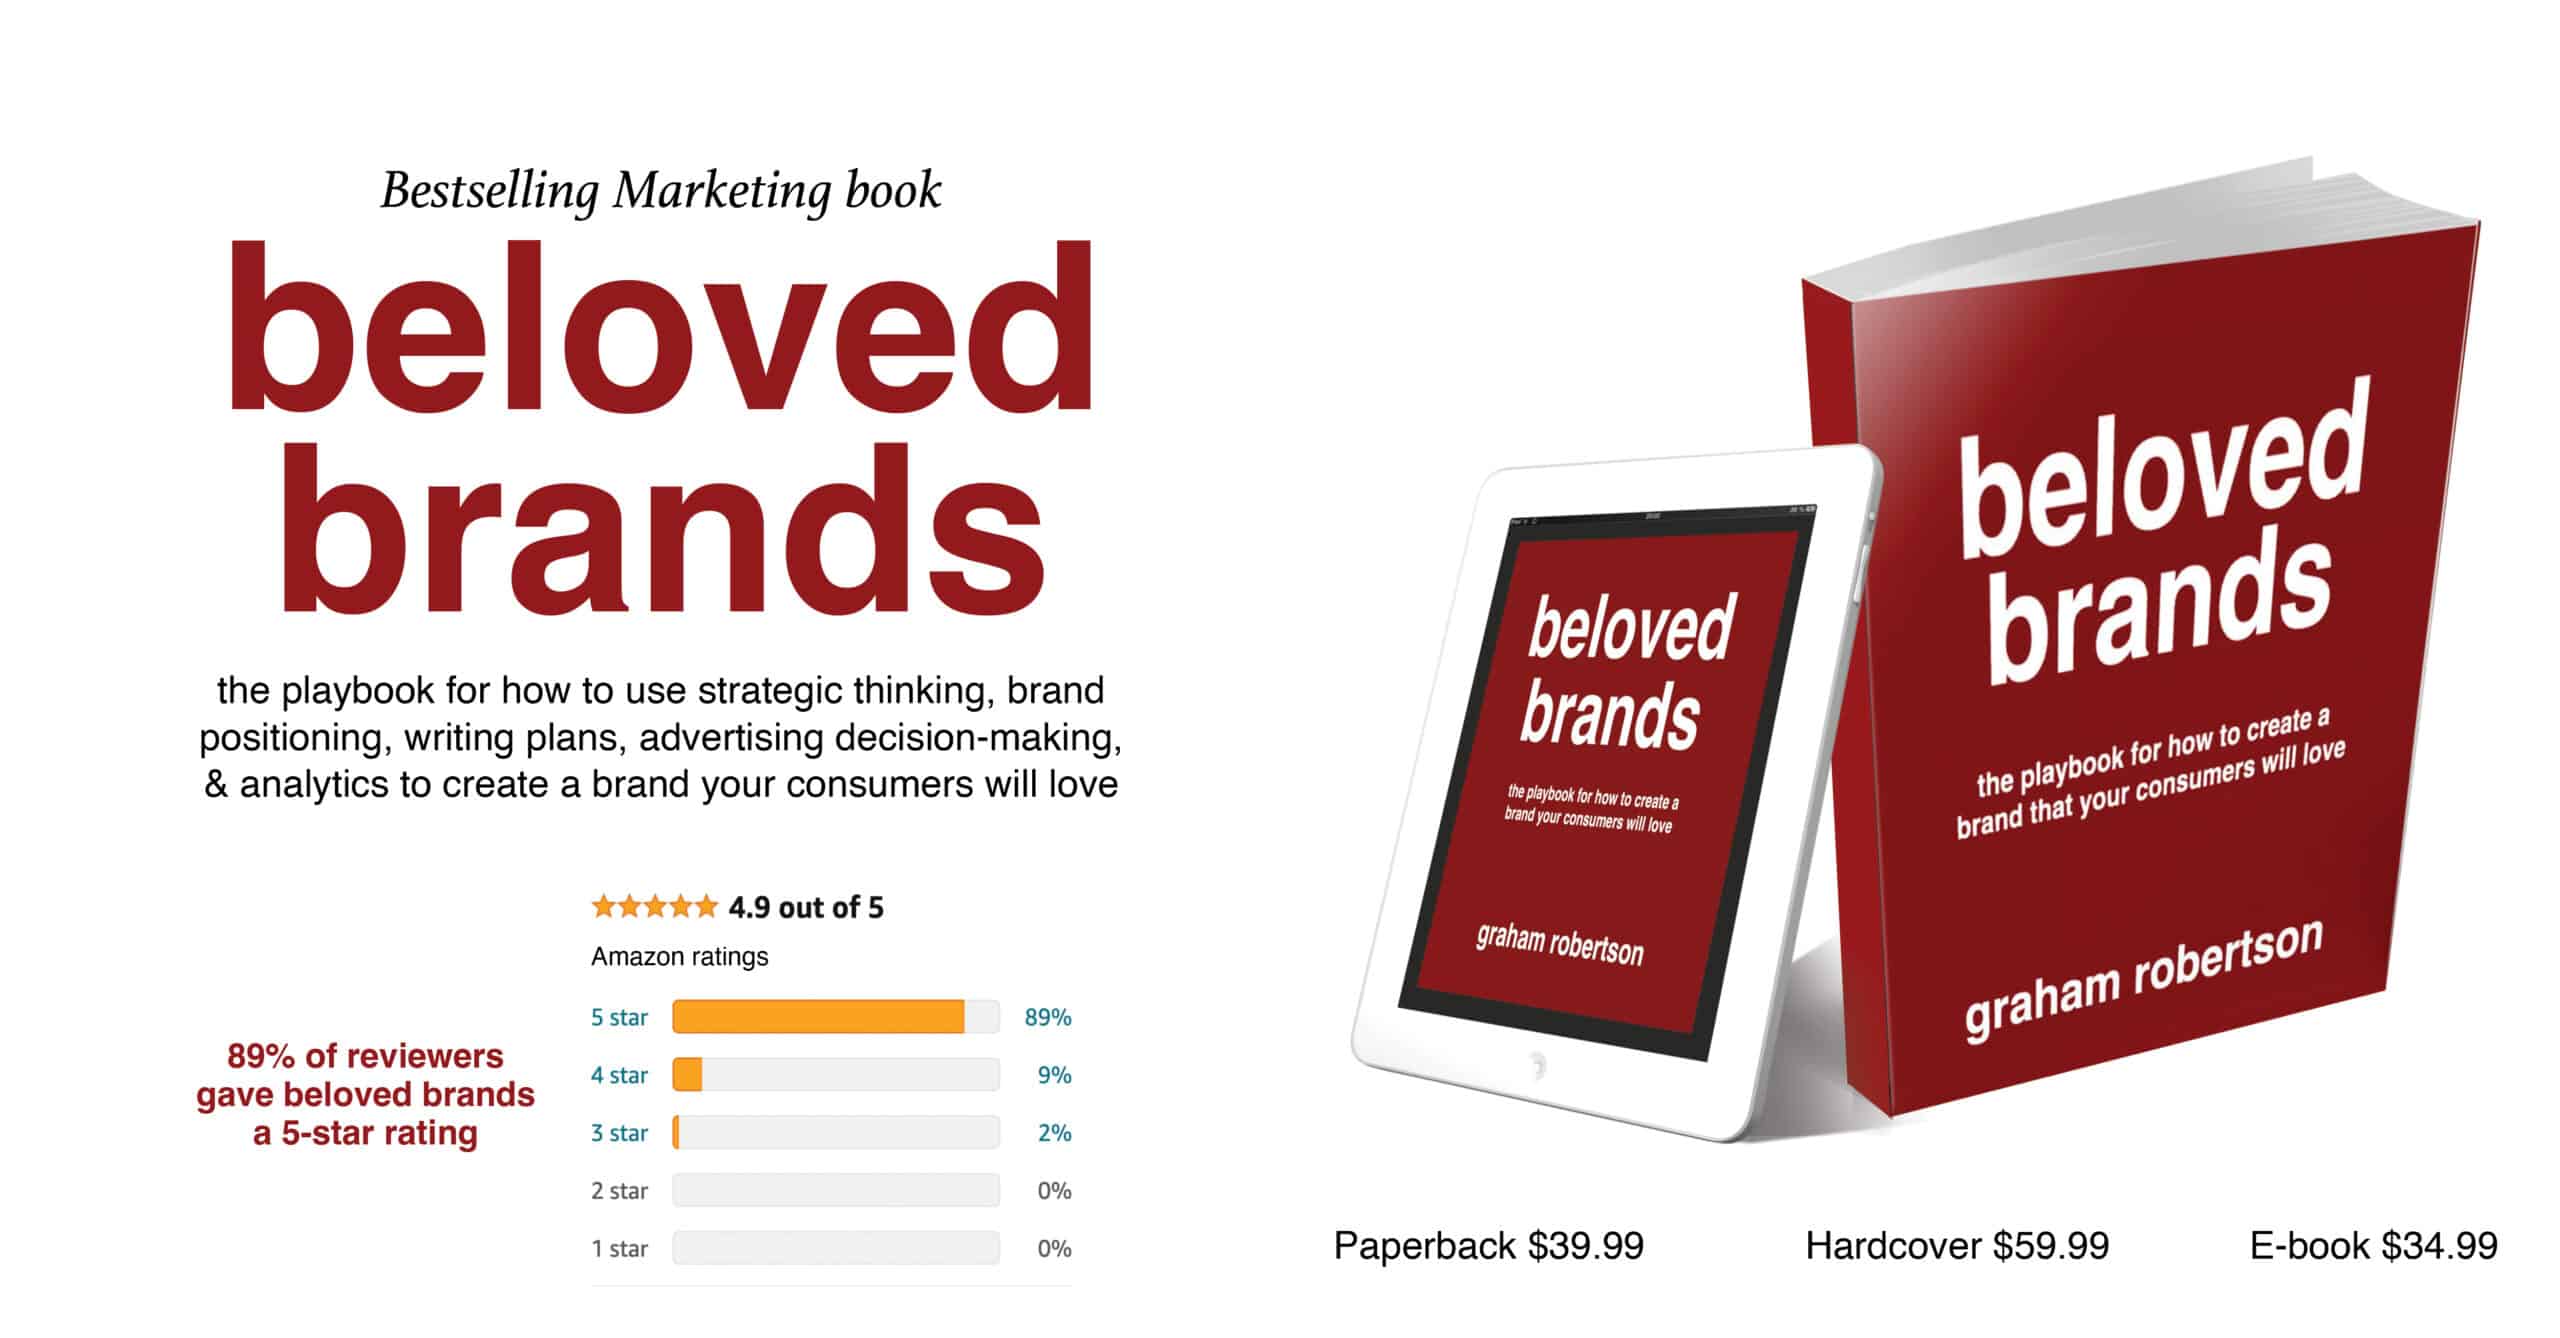 beloved brands book, marketing book